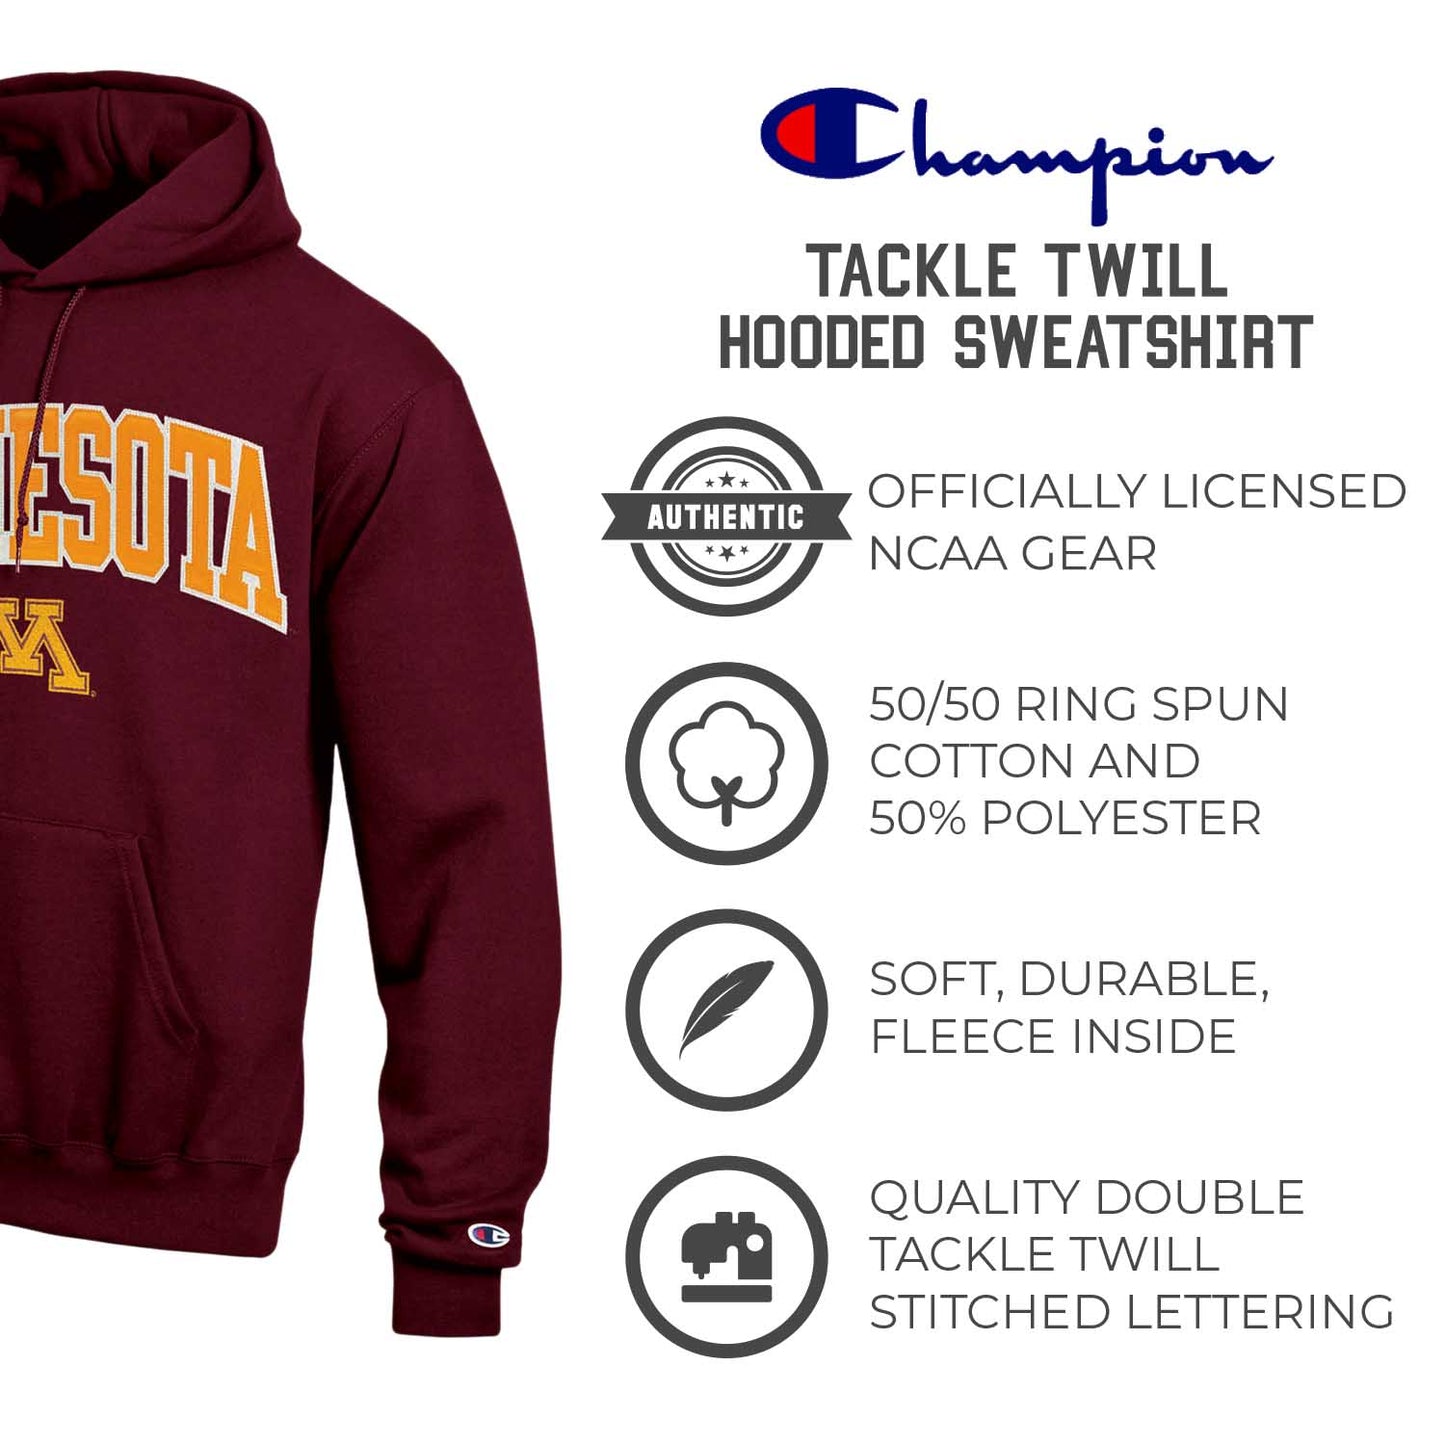 Minnesota Golden Gophers Champion Adult Tackle Twill Hooded Sweatshirt - Maroon